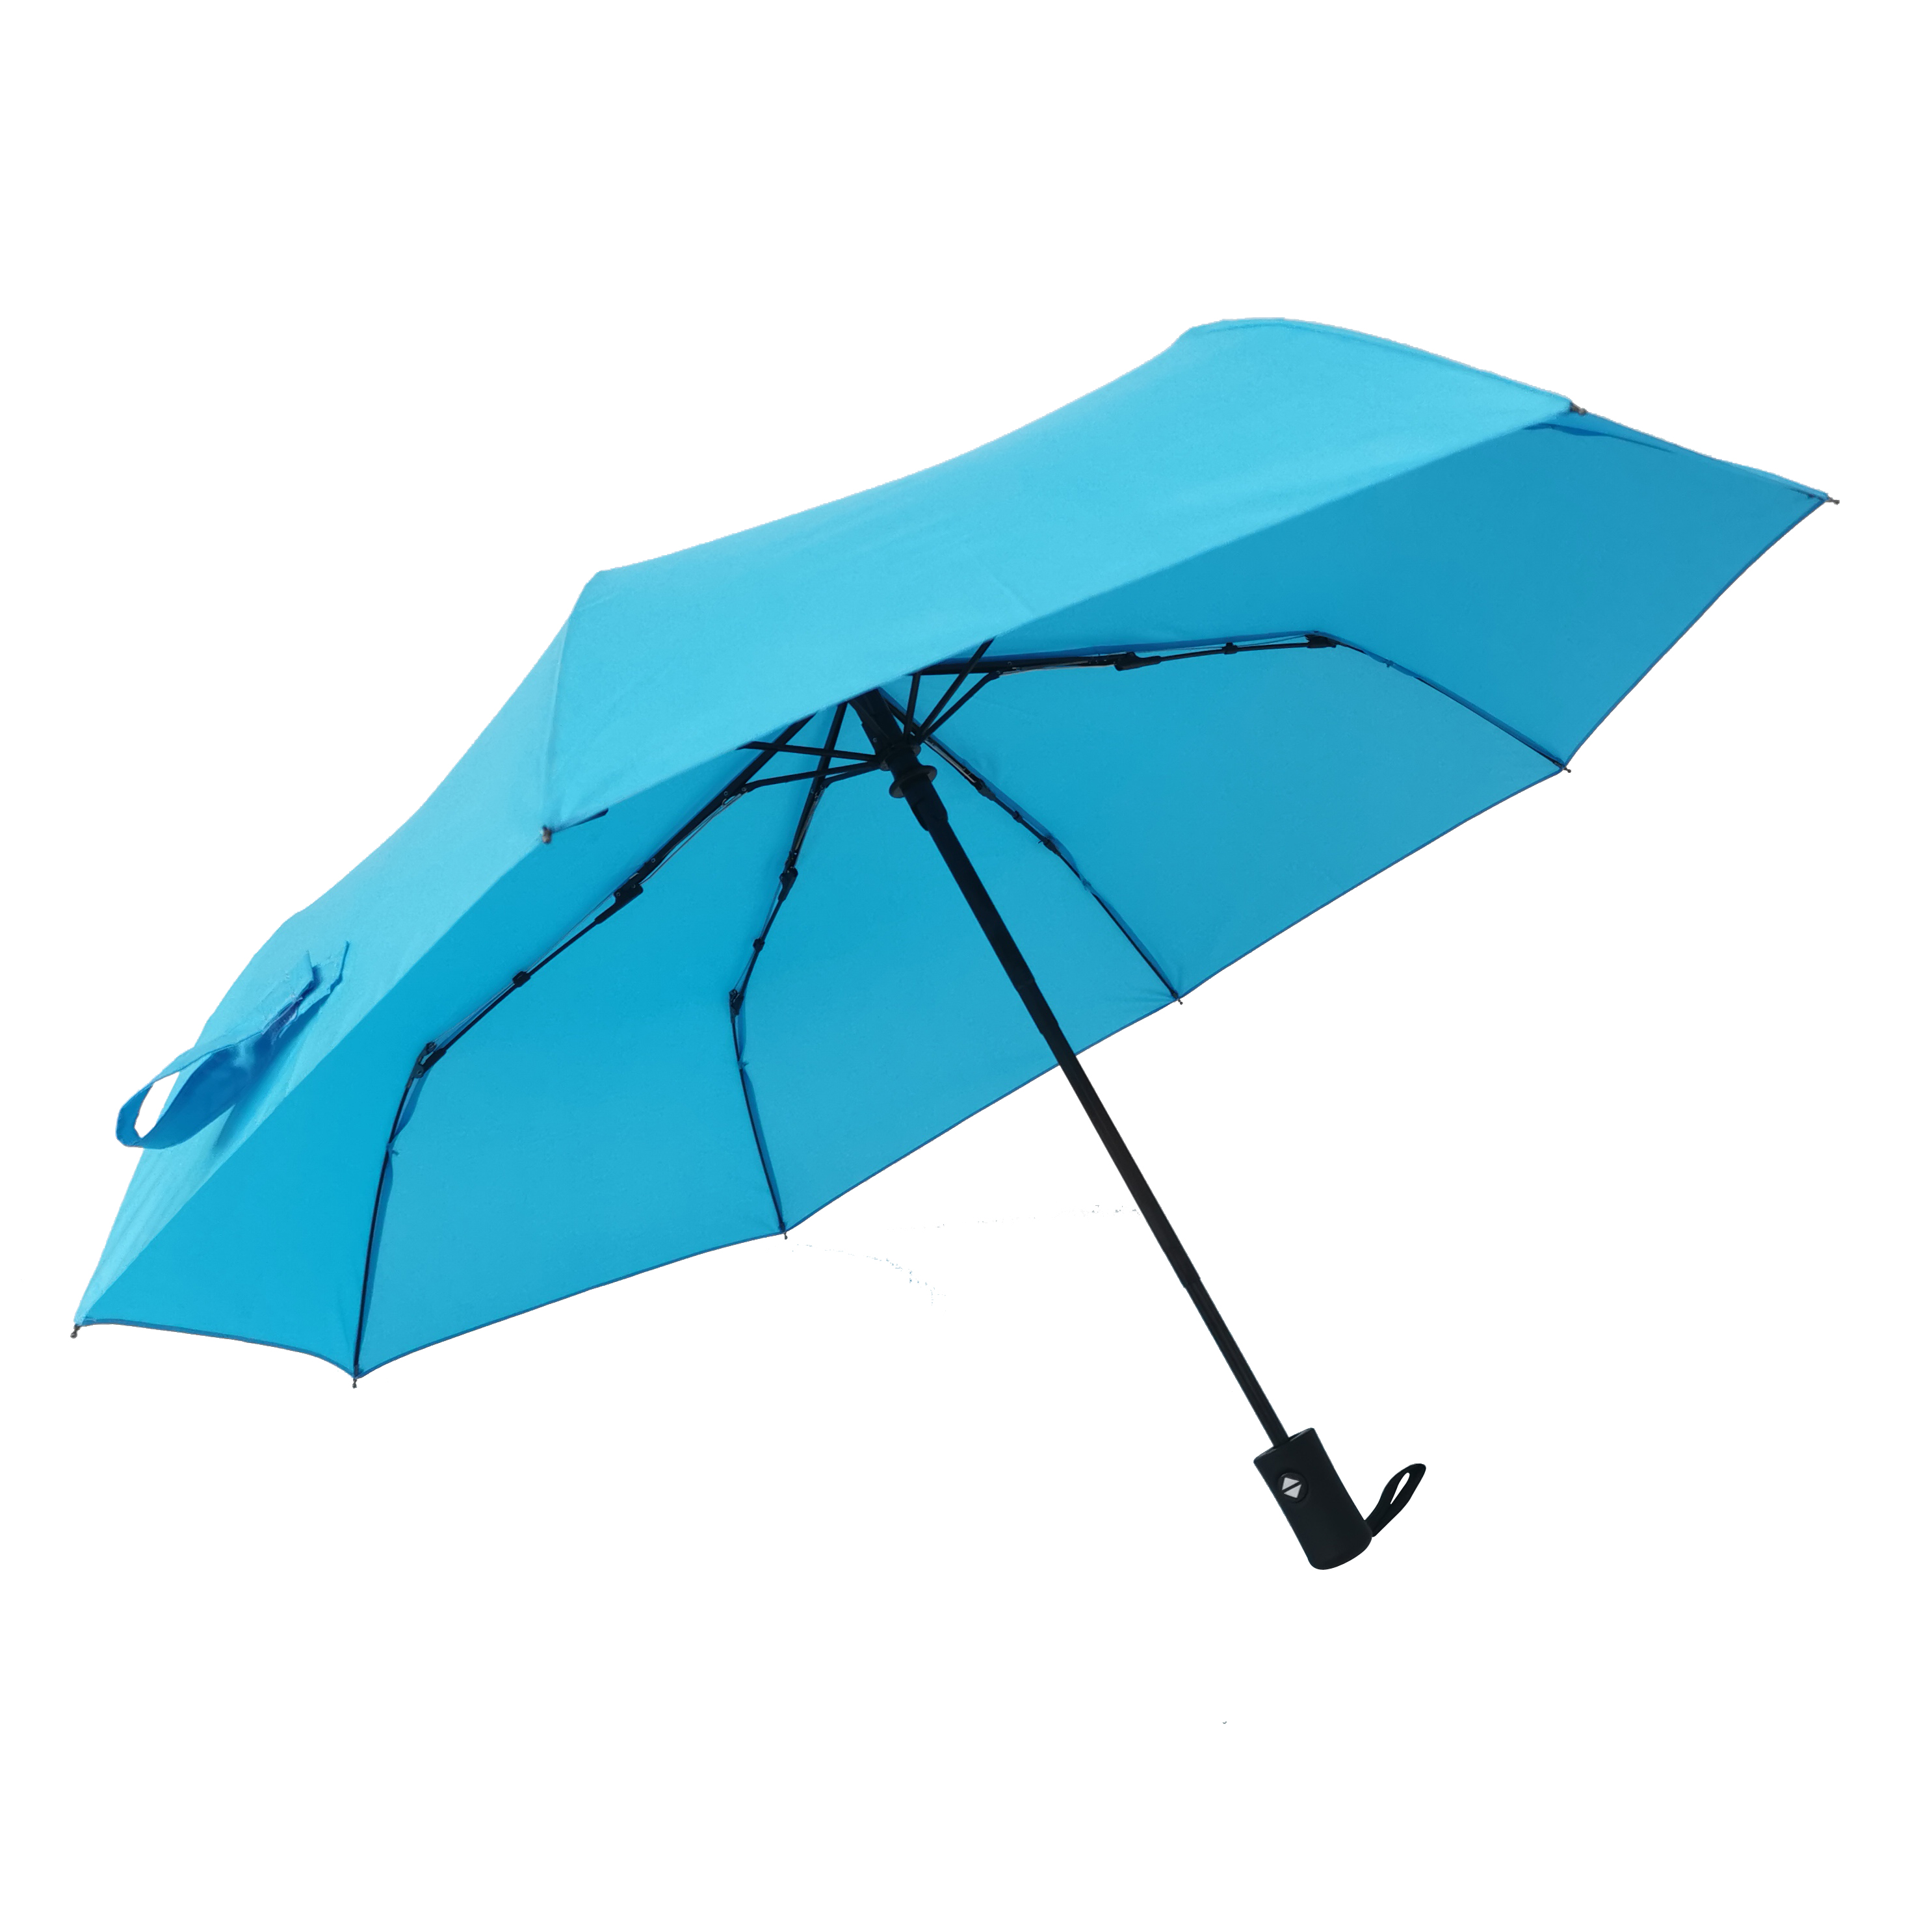 https://www.hodaumbrella.com/21-customization-fully-automatic-3-folding-sunrain-umbrella-for-adult-poliester-pongee-plastic-handle-6k-8k-product/